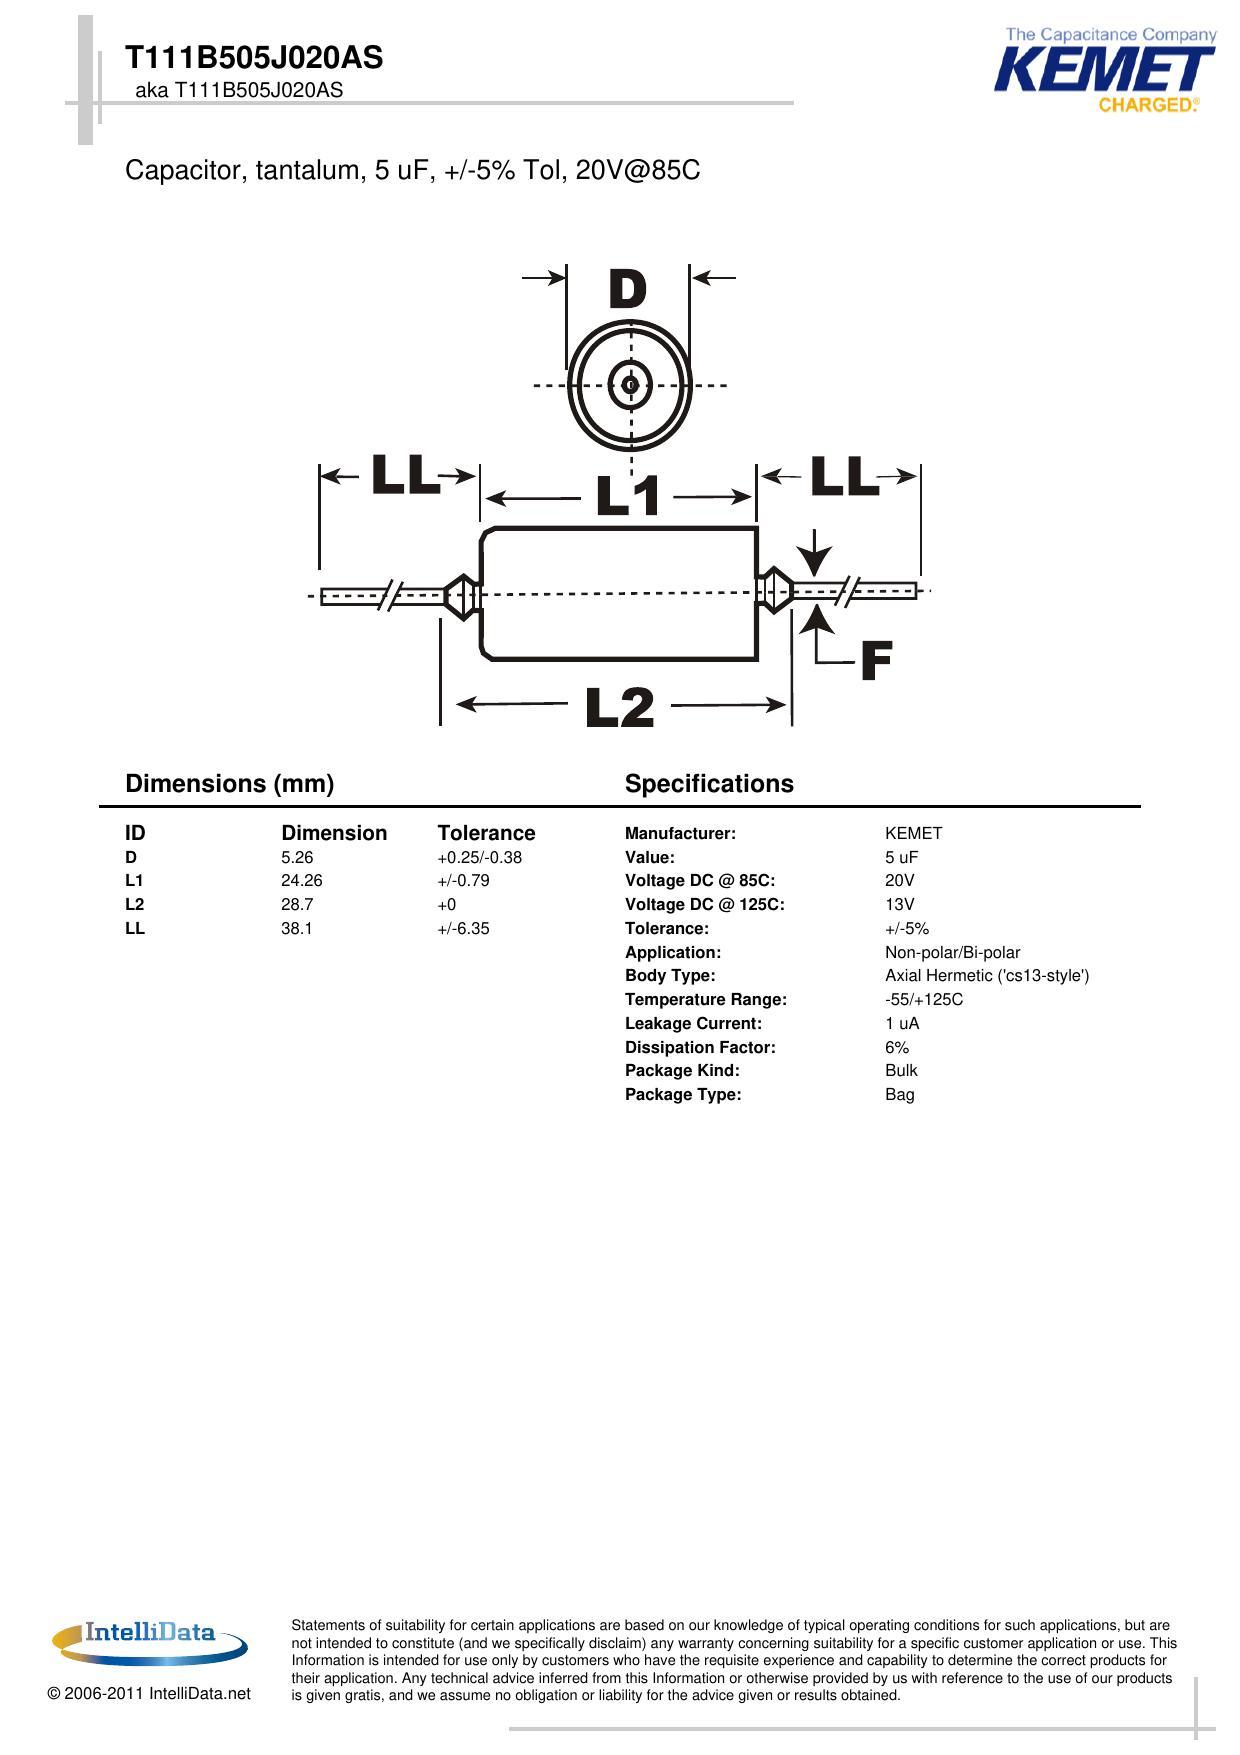 kemet-charged-tantalum-capacitor-datasheet.pdf